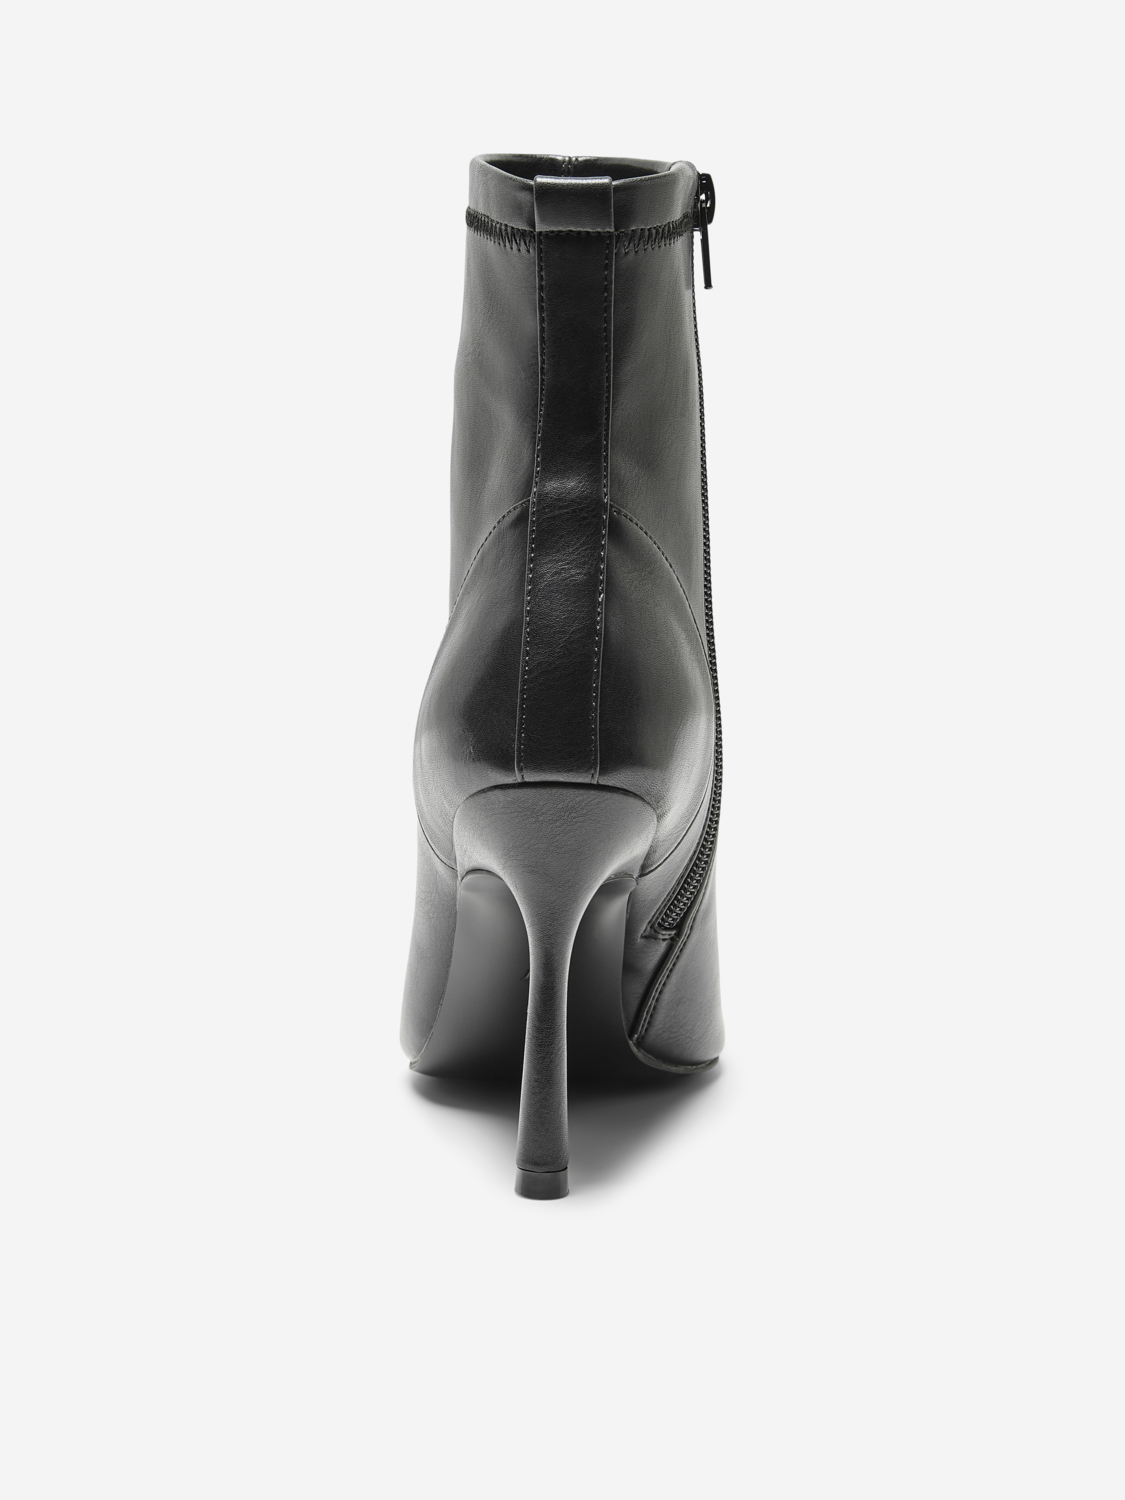 Cali stiletto heel ankle boots, BLACK, large